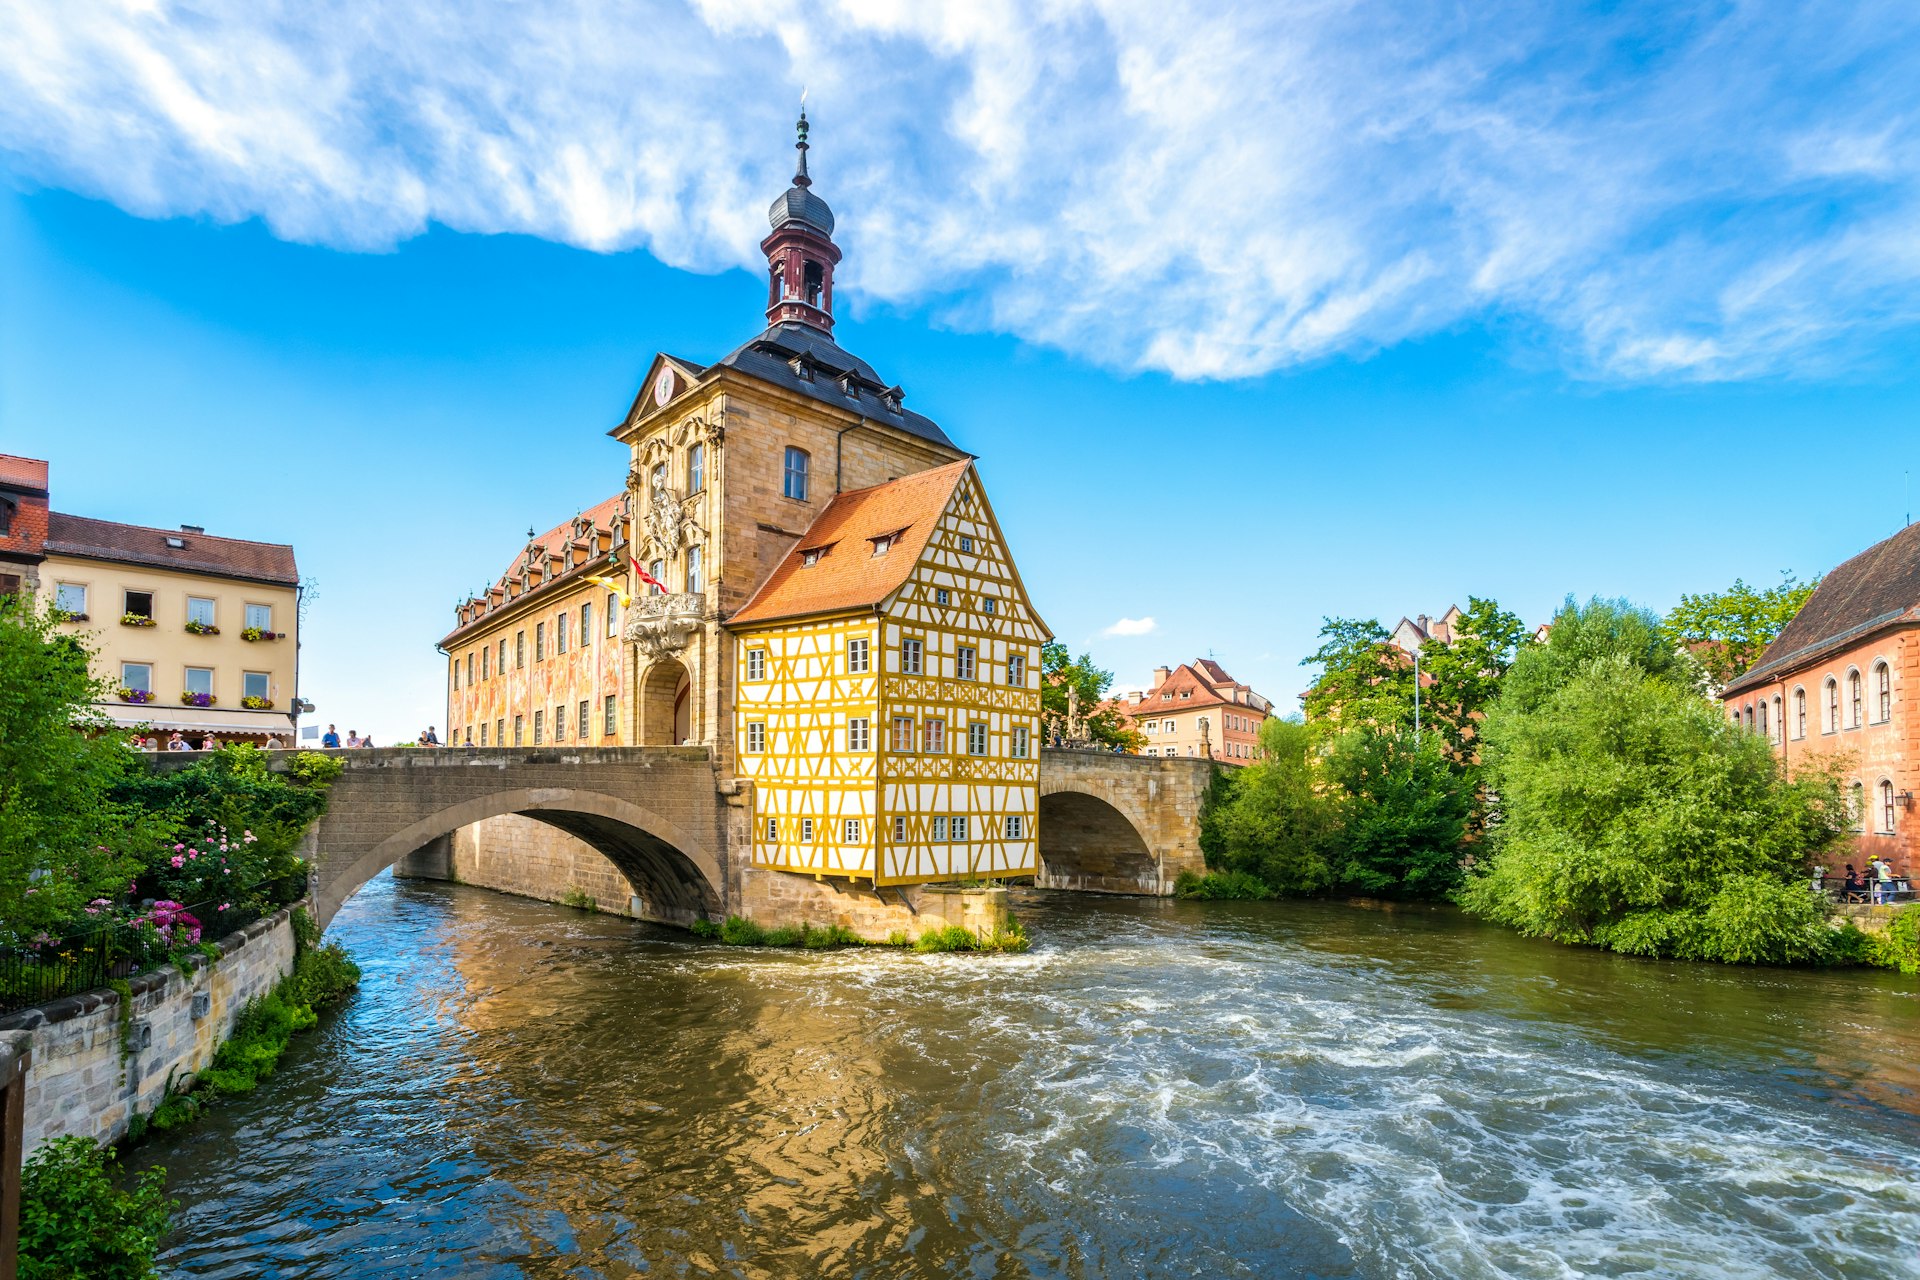 River running under a bridge in Bamberg, Germany